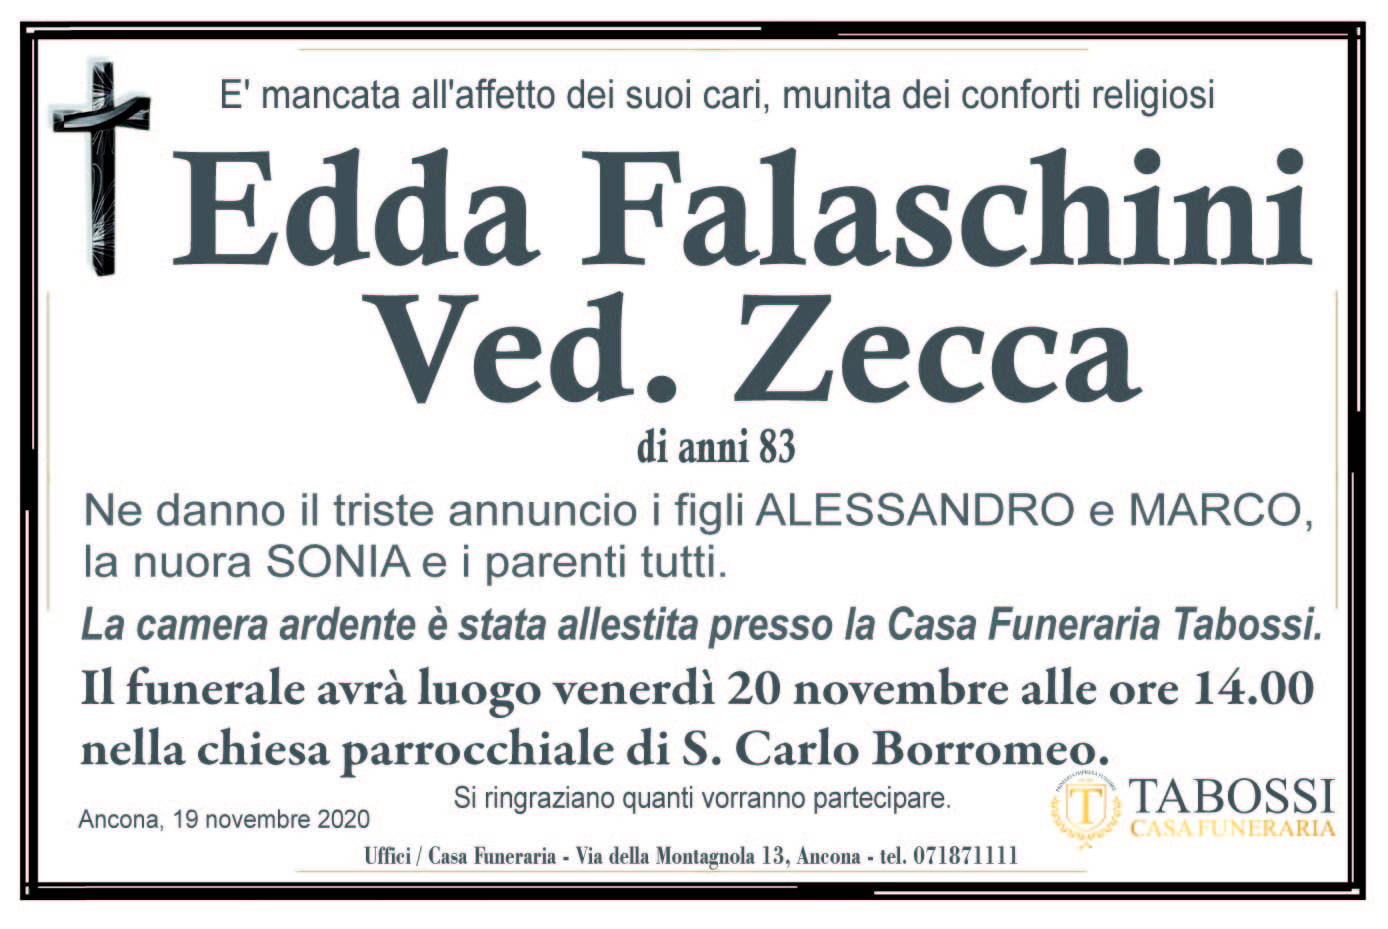 Edda Falaschini